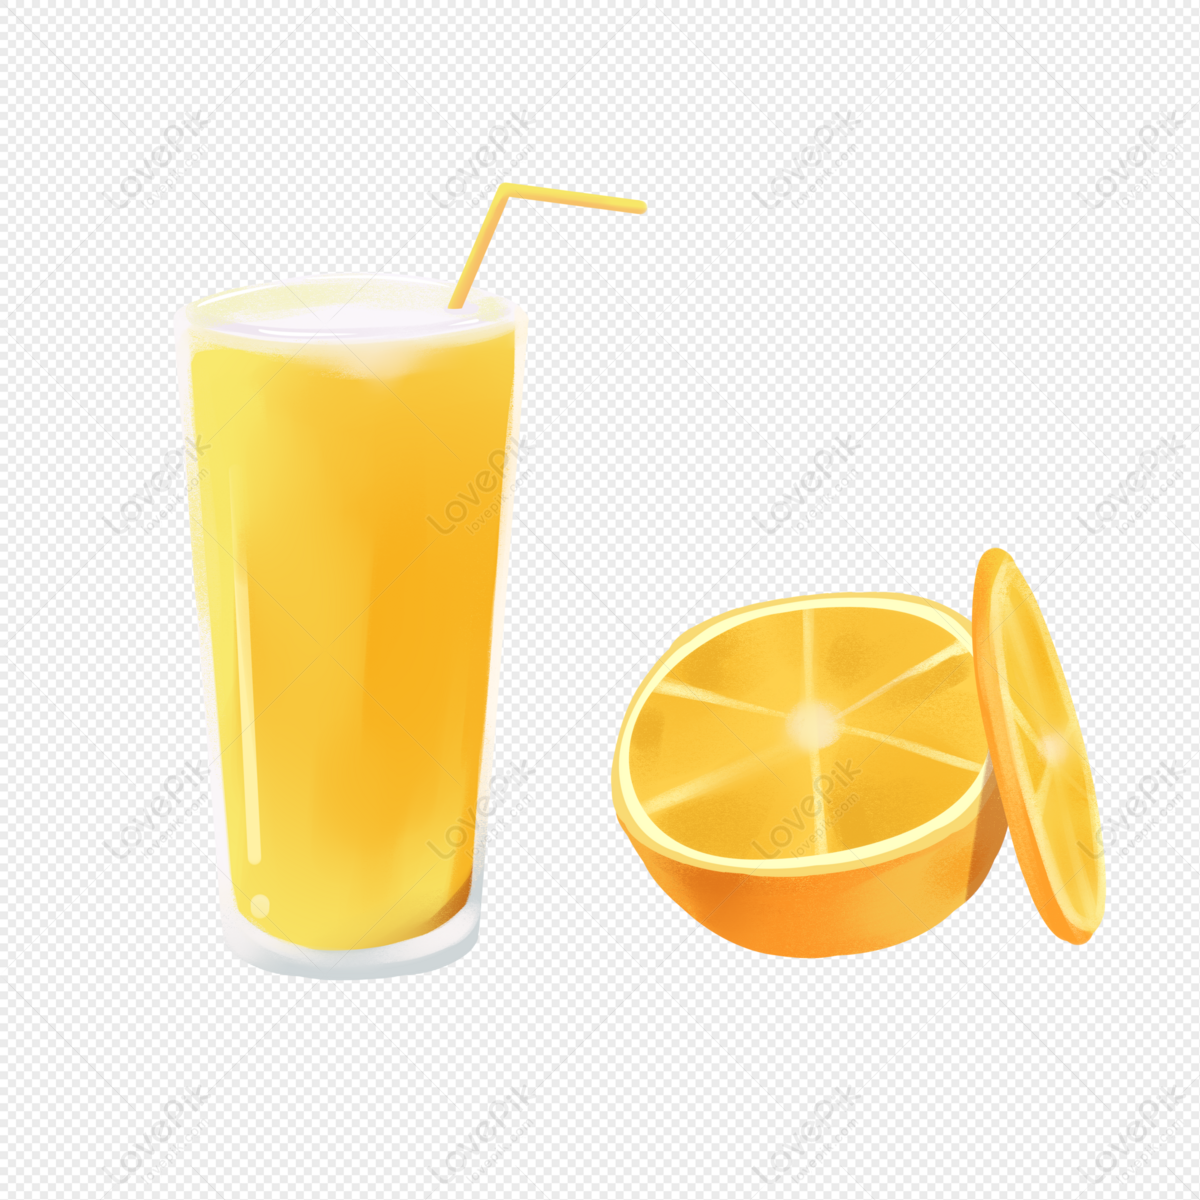 Orange Juice PNG Transparent Background And Clipart Image For Free Download  - Lovepik | 401451350